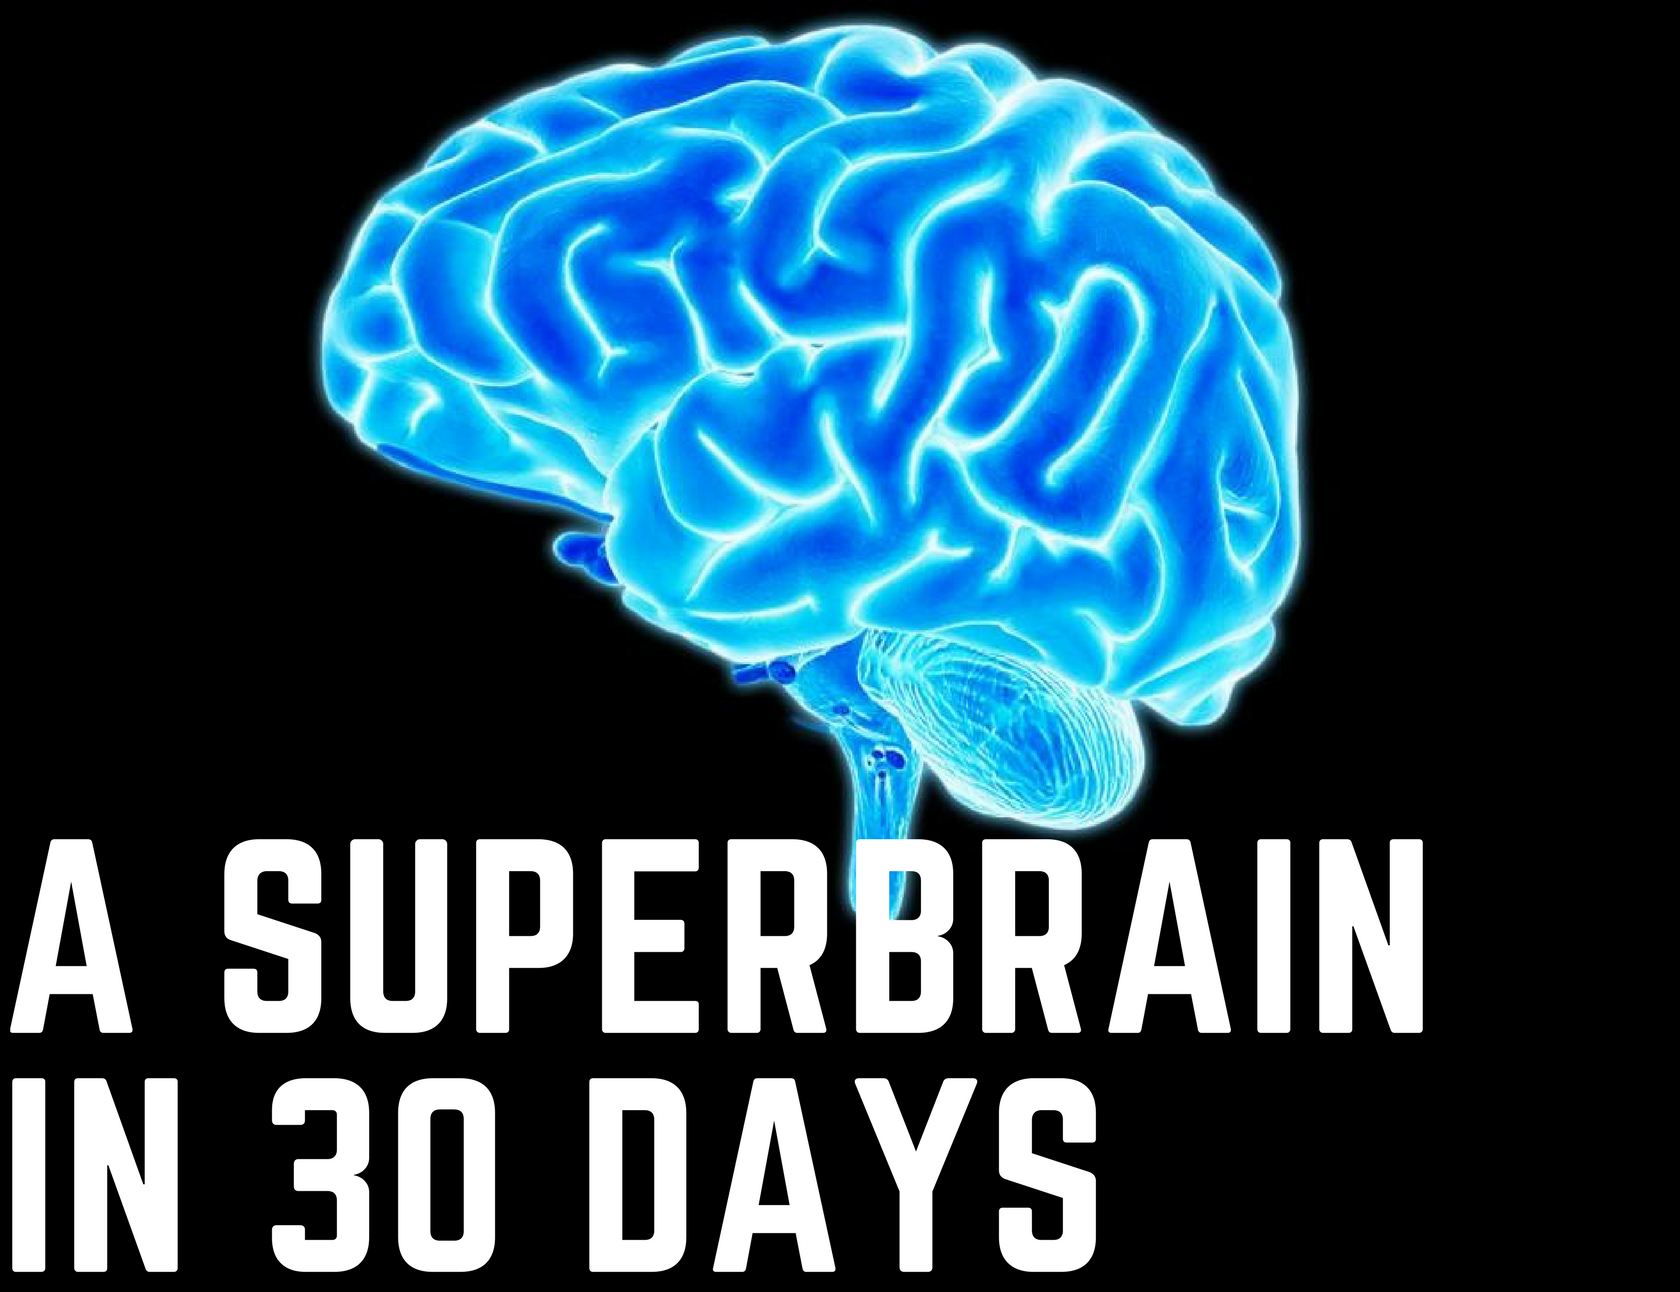 Brain 85. It мозг. Мозг Больцмана. Нейропсихология фон.